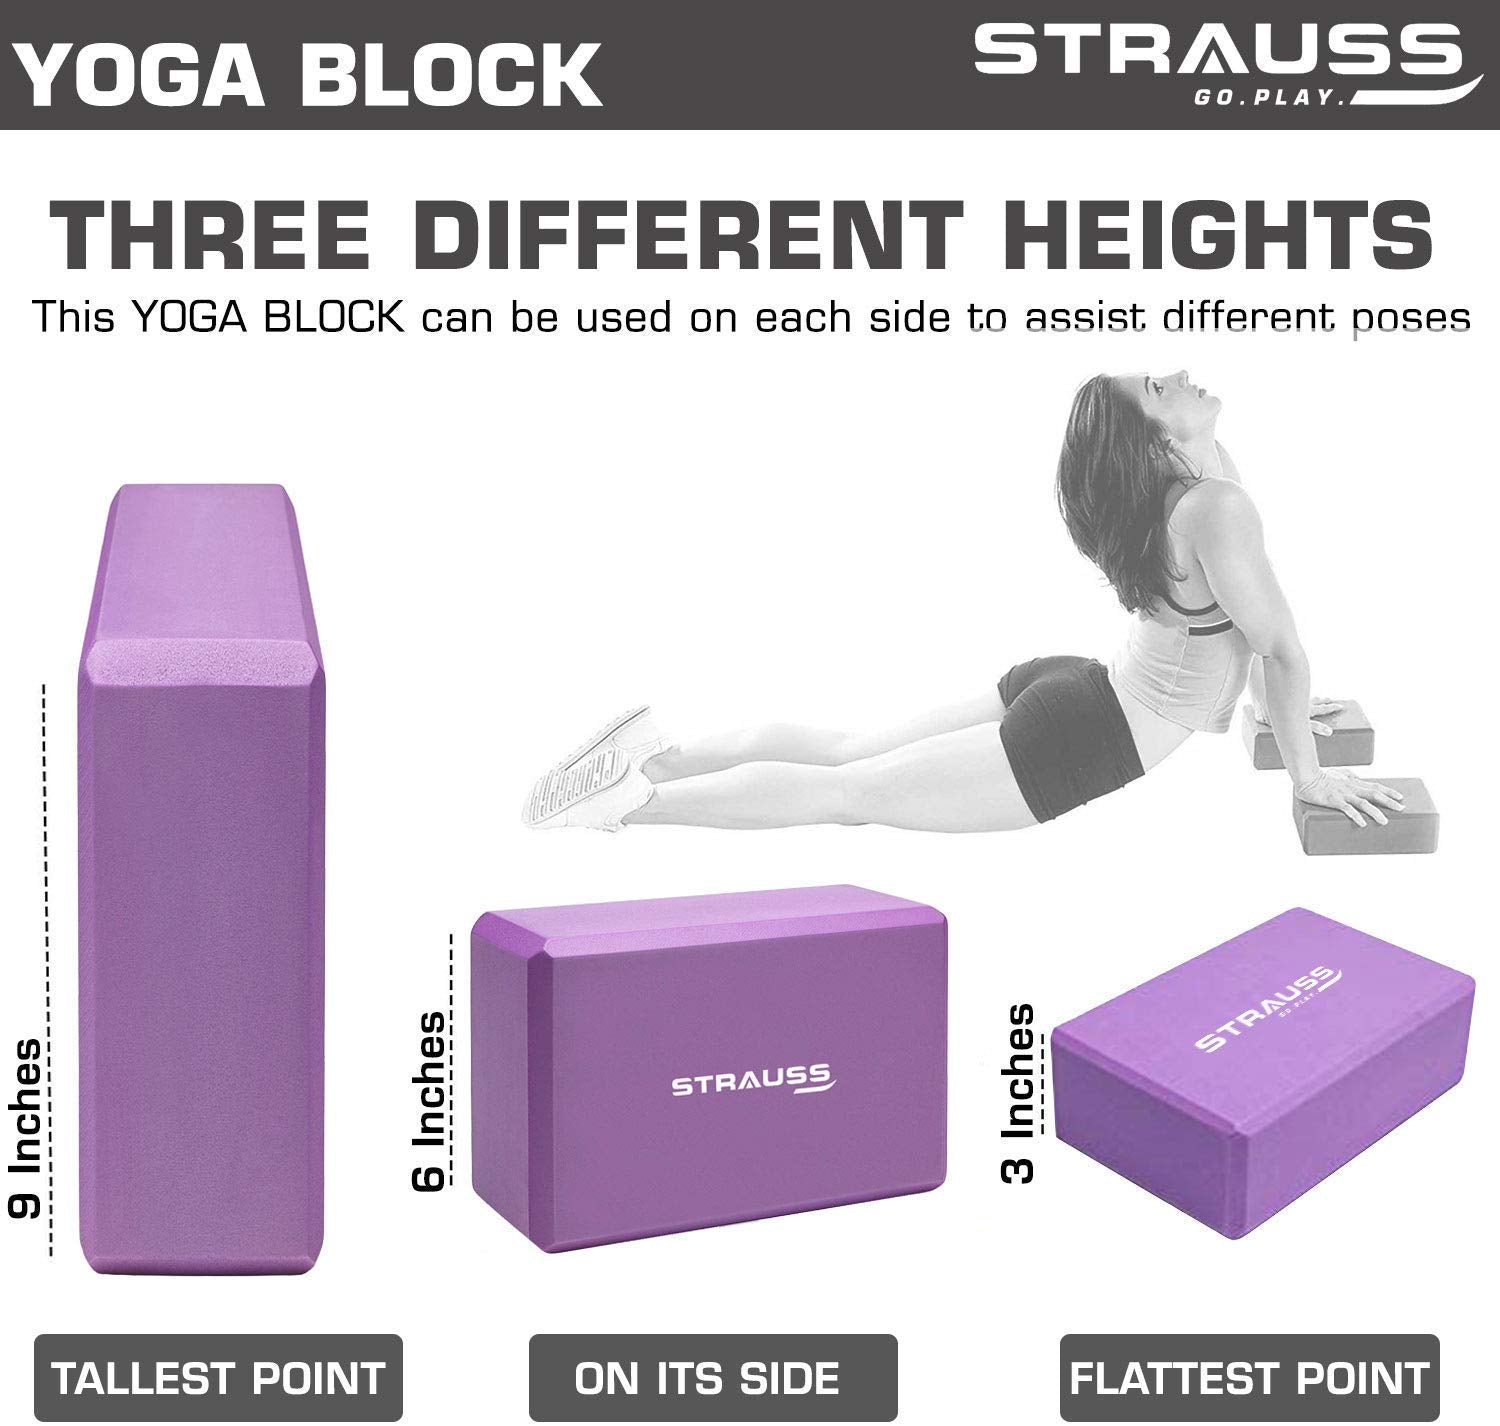 Strauss Lightweight Eco Friendly Yoga Mat 6 mm (Purple), Yoga Block (Purple) Pair, Anti-Slip Yoga Towel (Blue) and Yoga Belt (Blue)